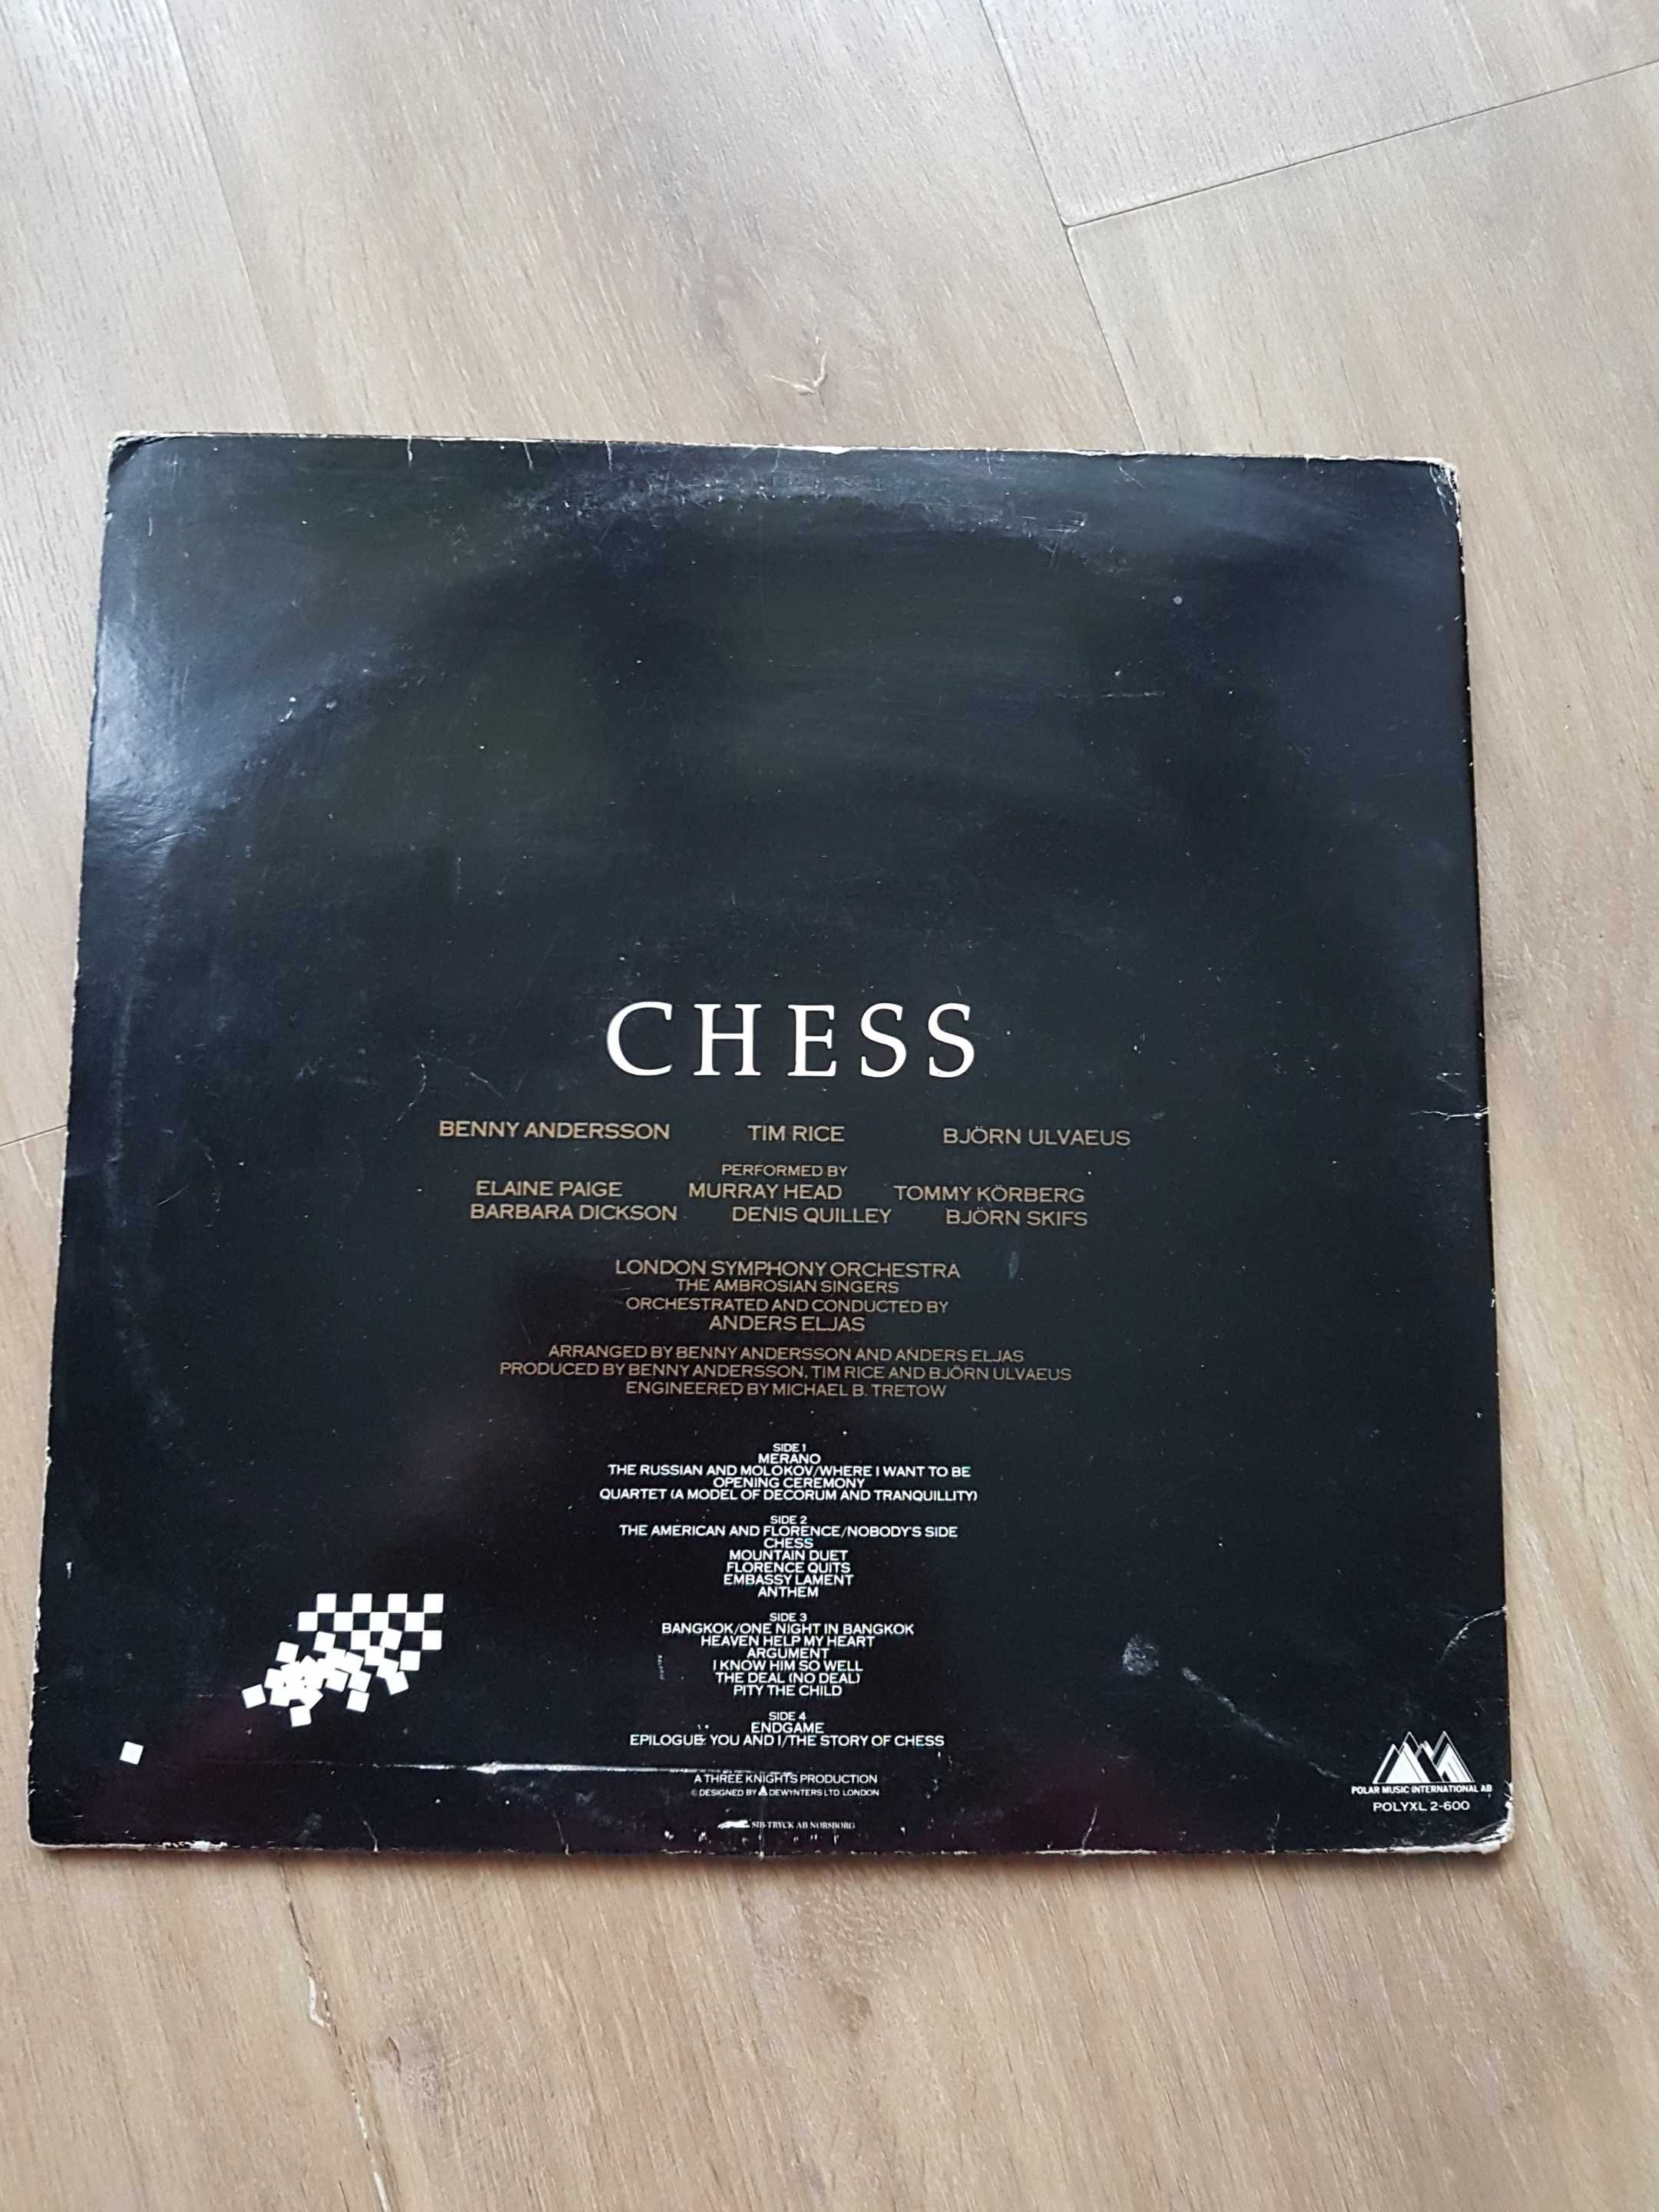 Winyl CHESS POLYXL 2-600 - 1984 3 Knight Ltd 2 Record Set